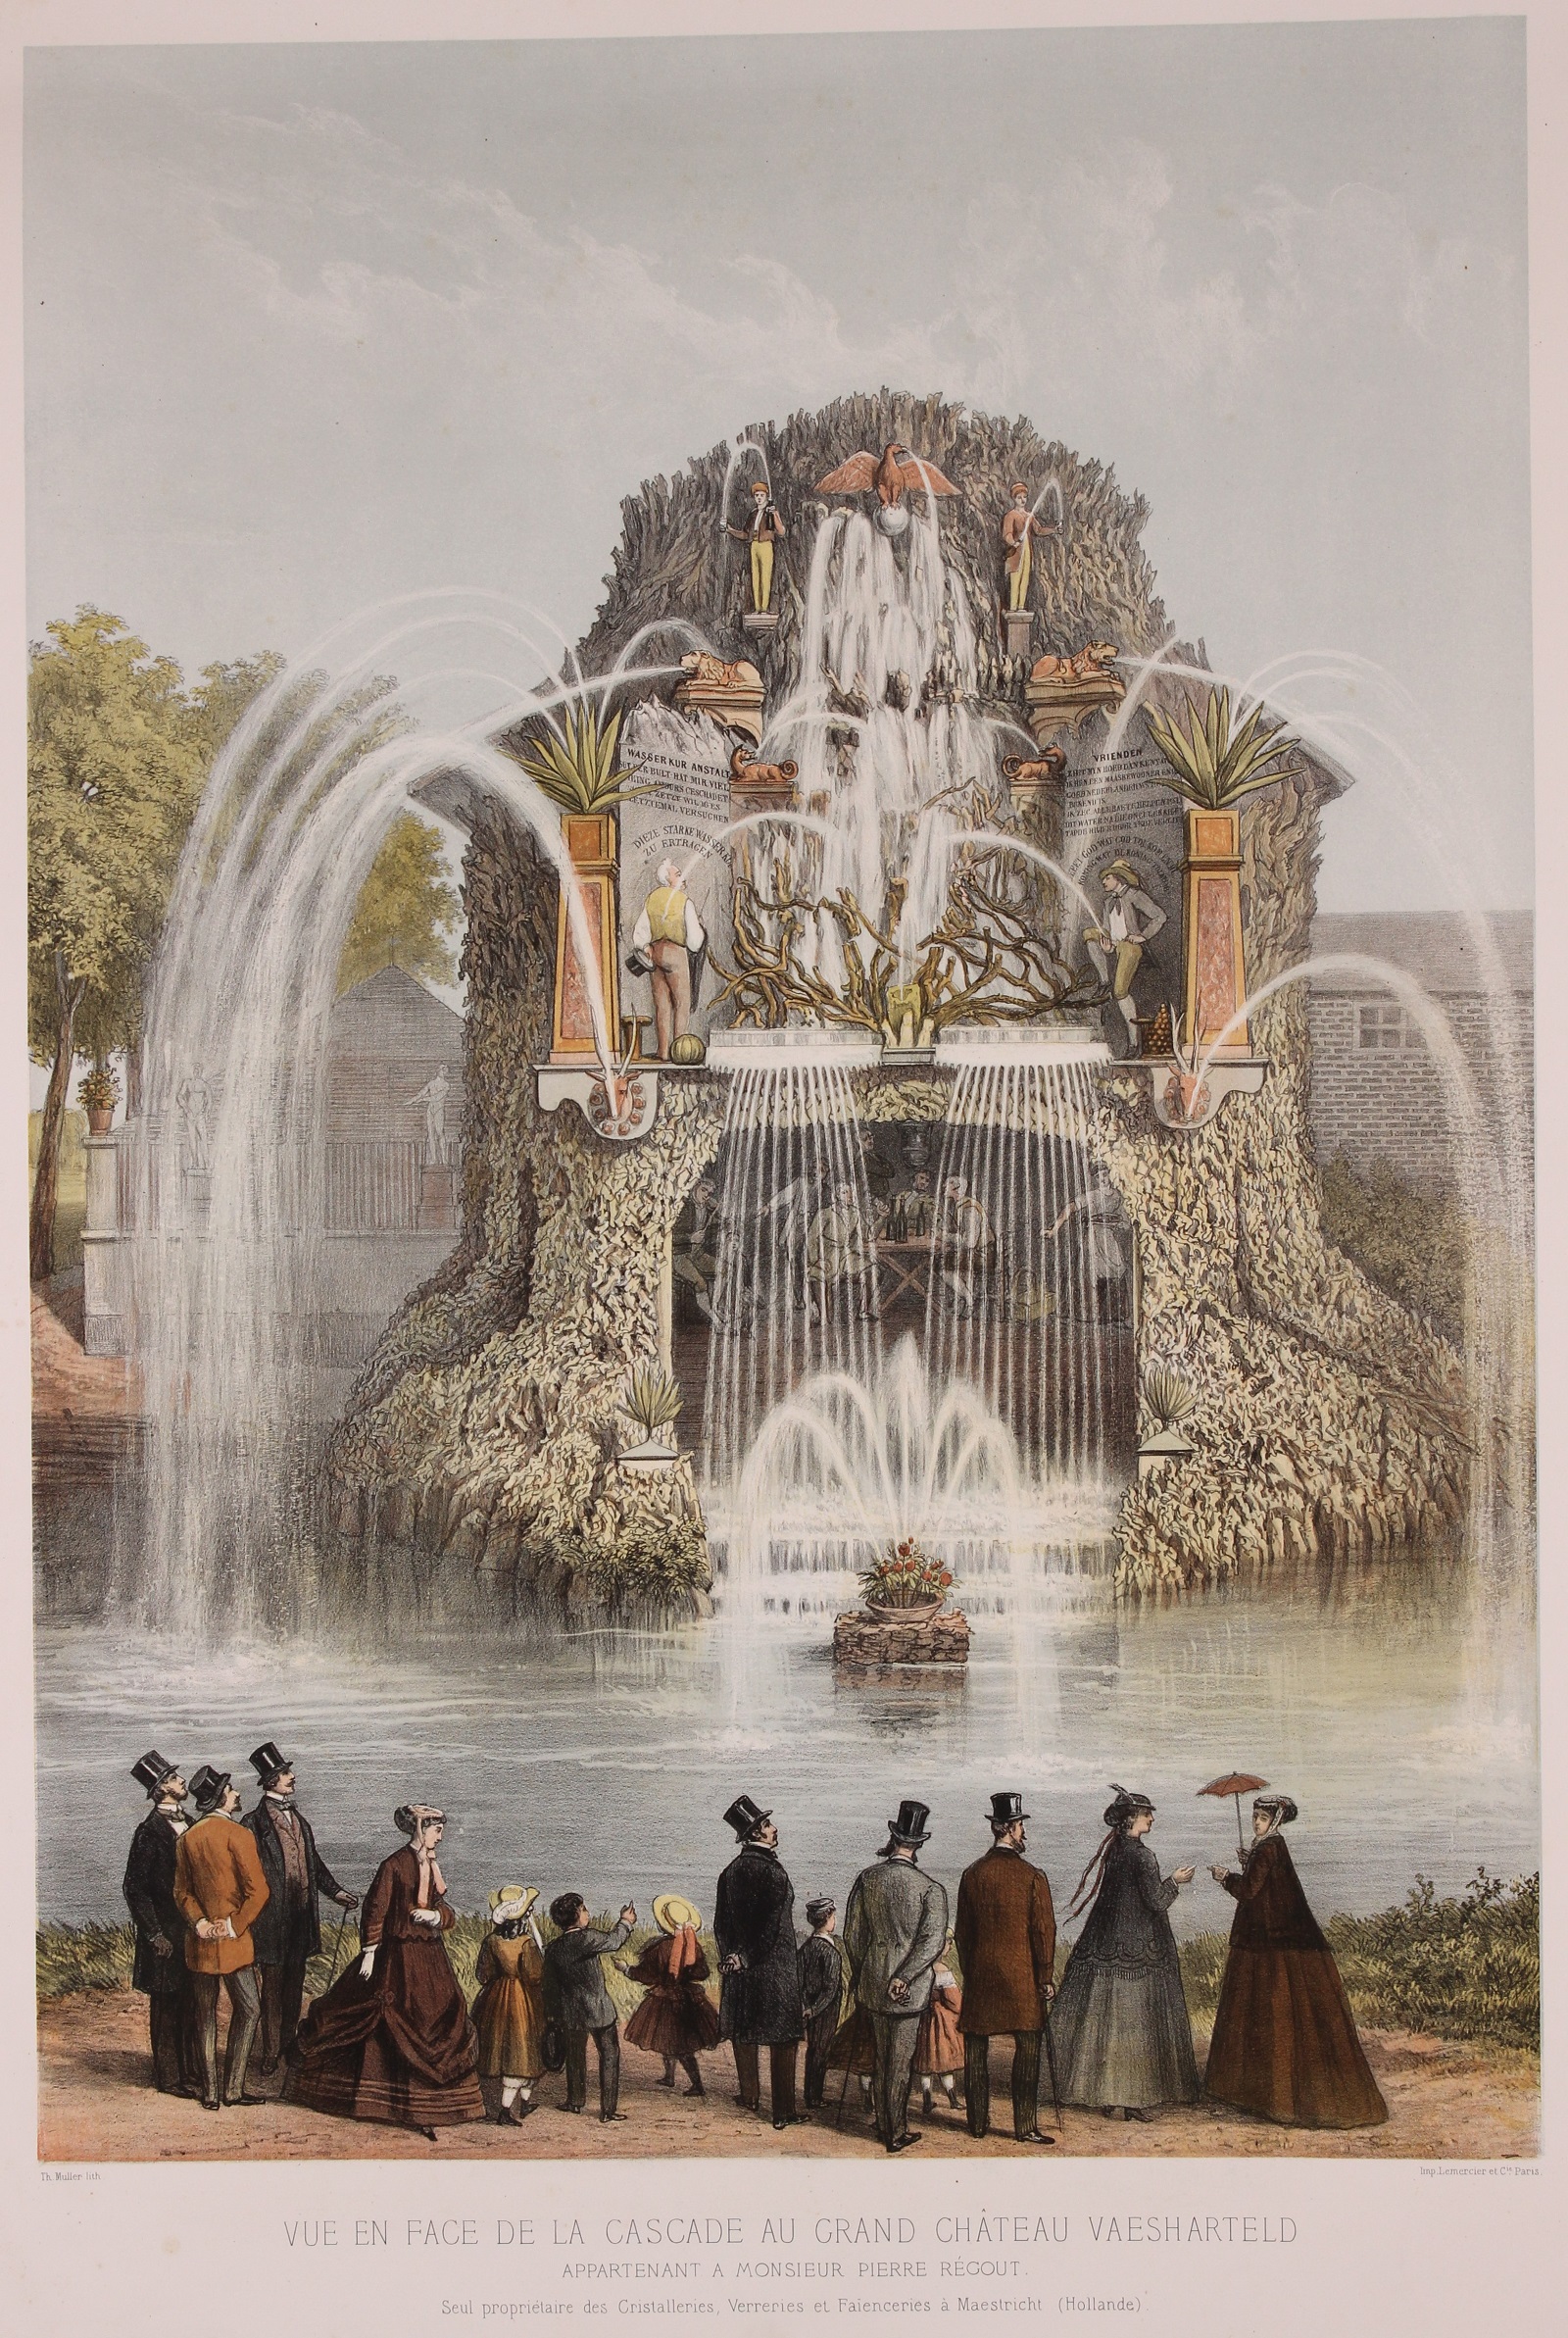  - Cascade Chateau Vaeshartelt  - Theodore Mller + Lemercier, 1863